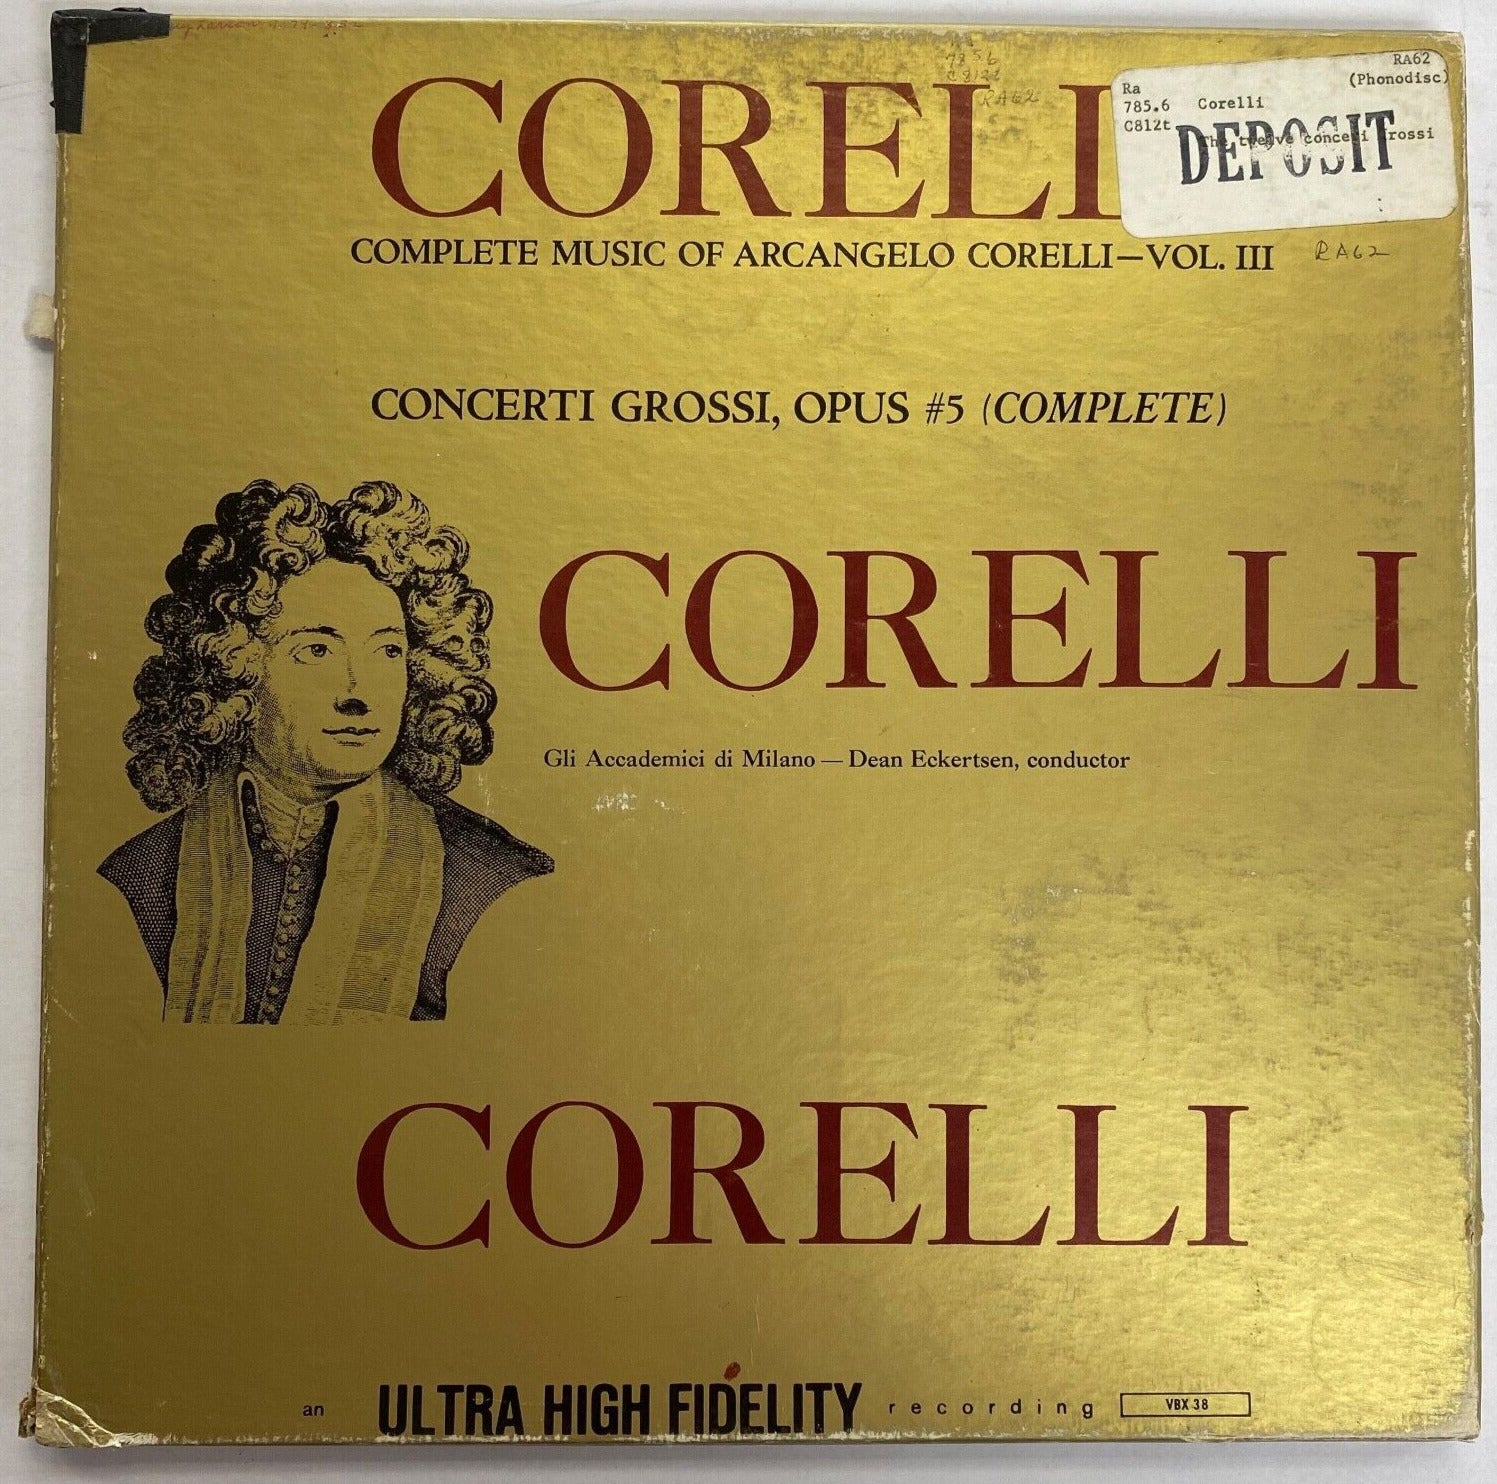 Corelli Complete Music of Arcangelo Corelli - Vol. III LP